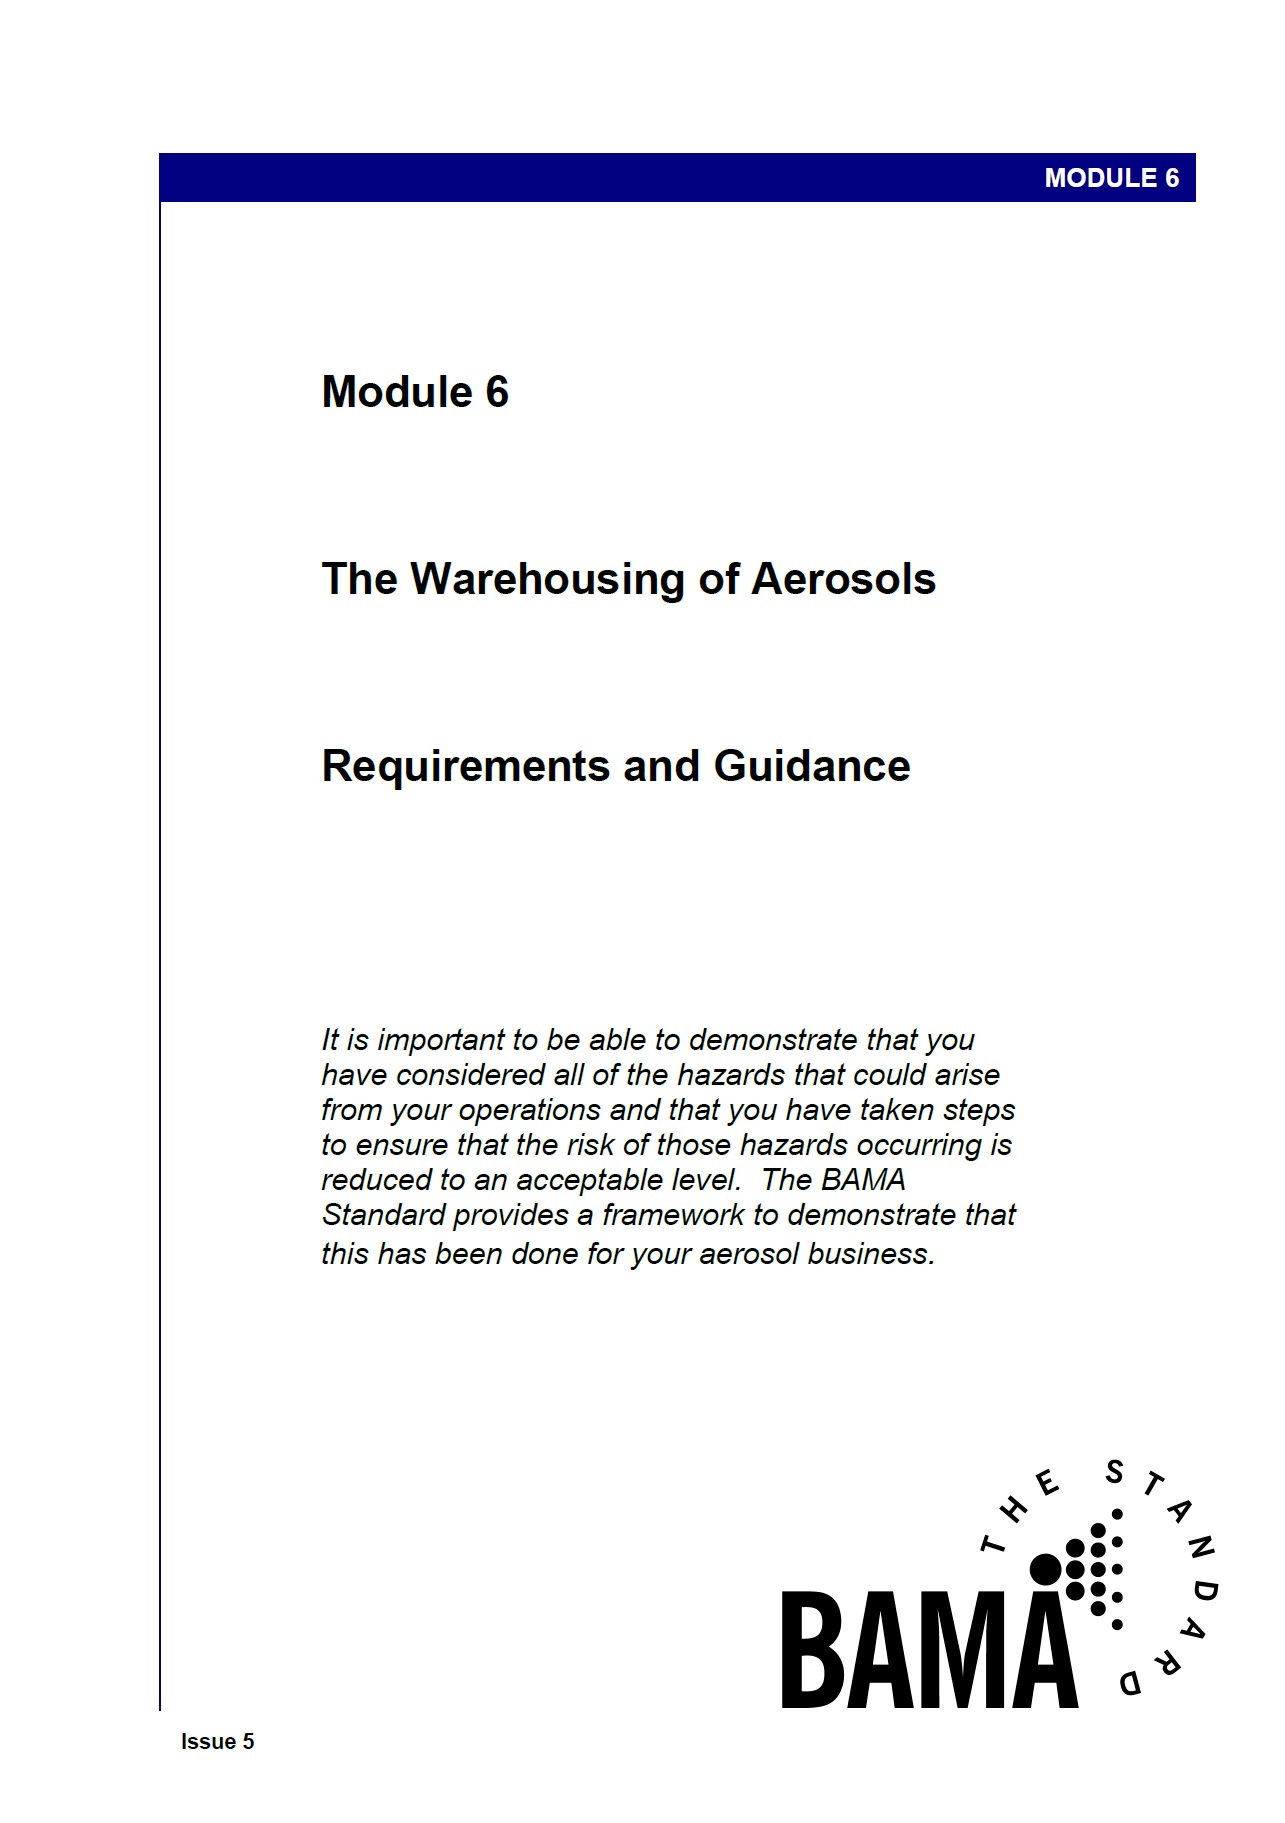 Module 6: Warehousing of Aerosols